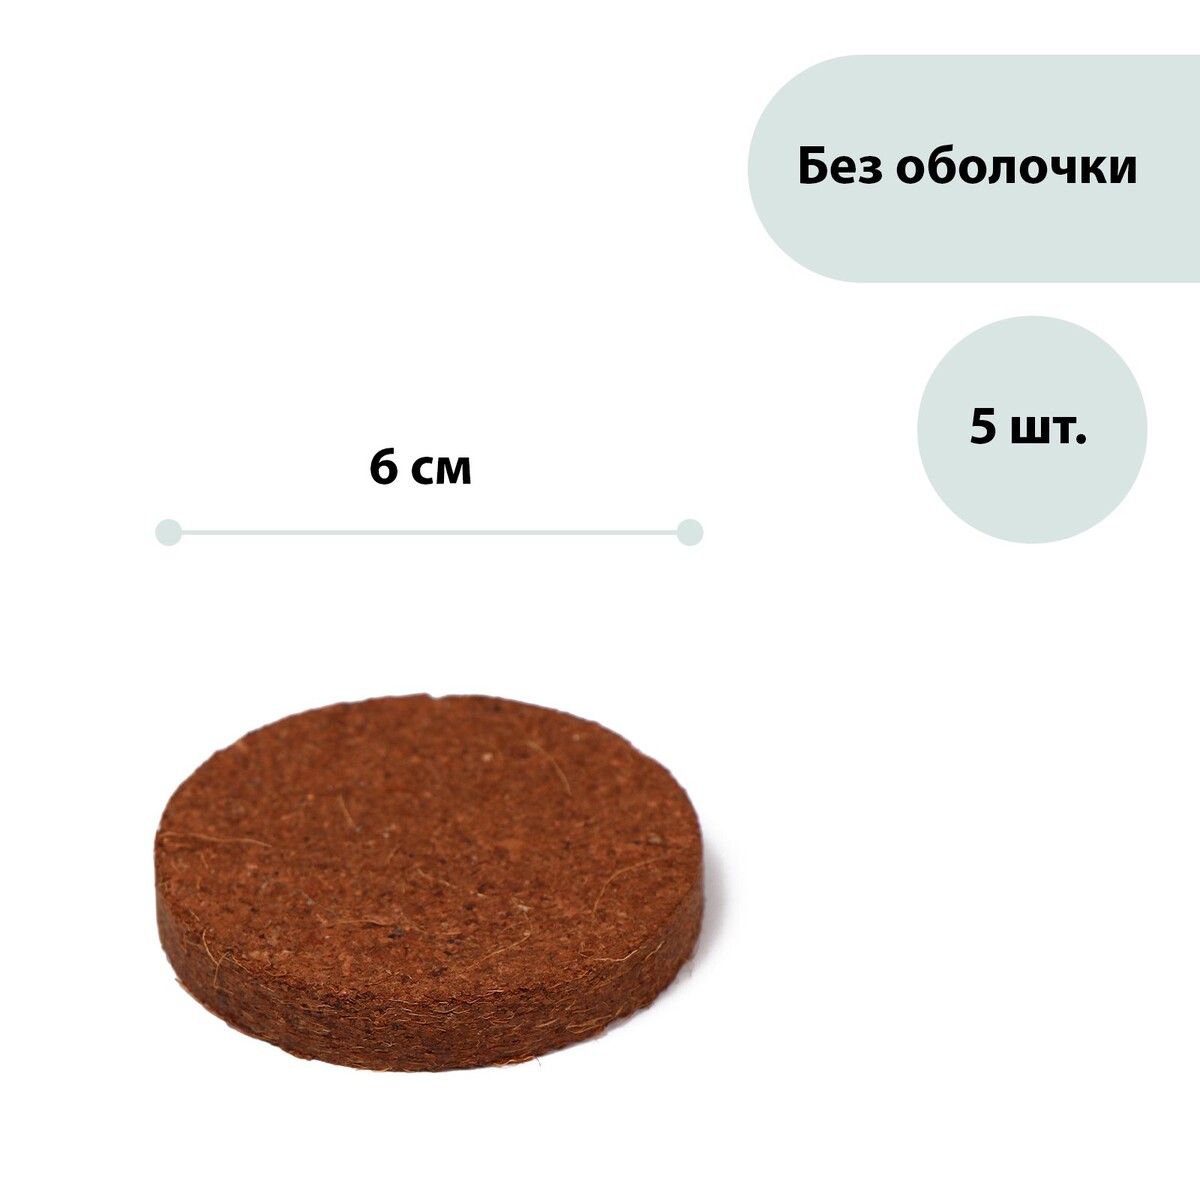 Таблетки кокосовые, d = 6 см, набор 5 шт., без оболочки, greengo омарон таблетки 30